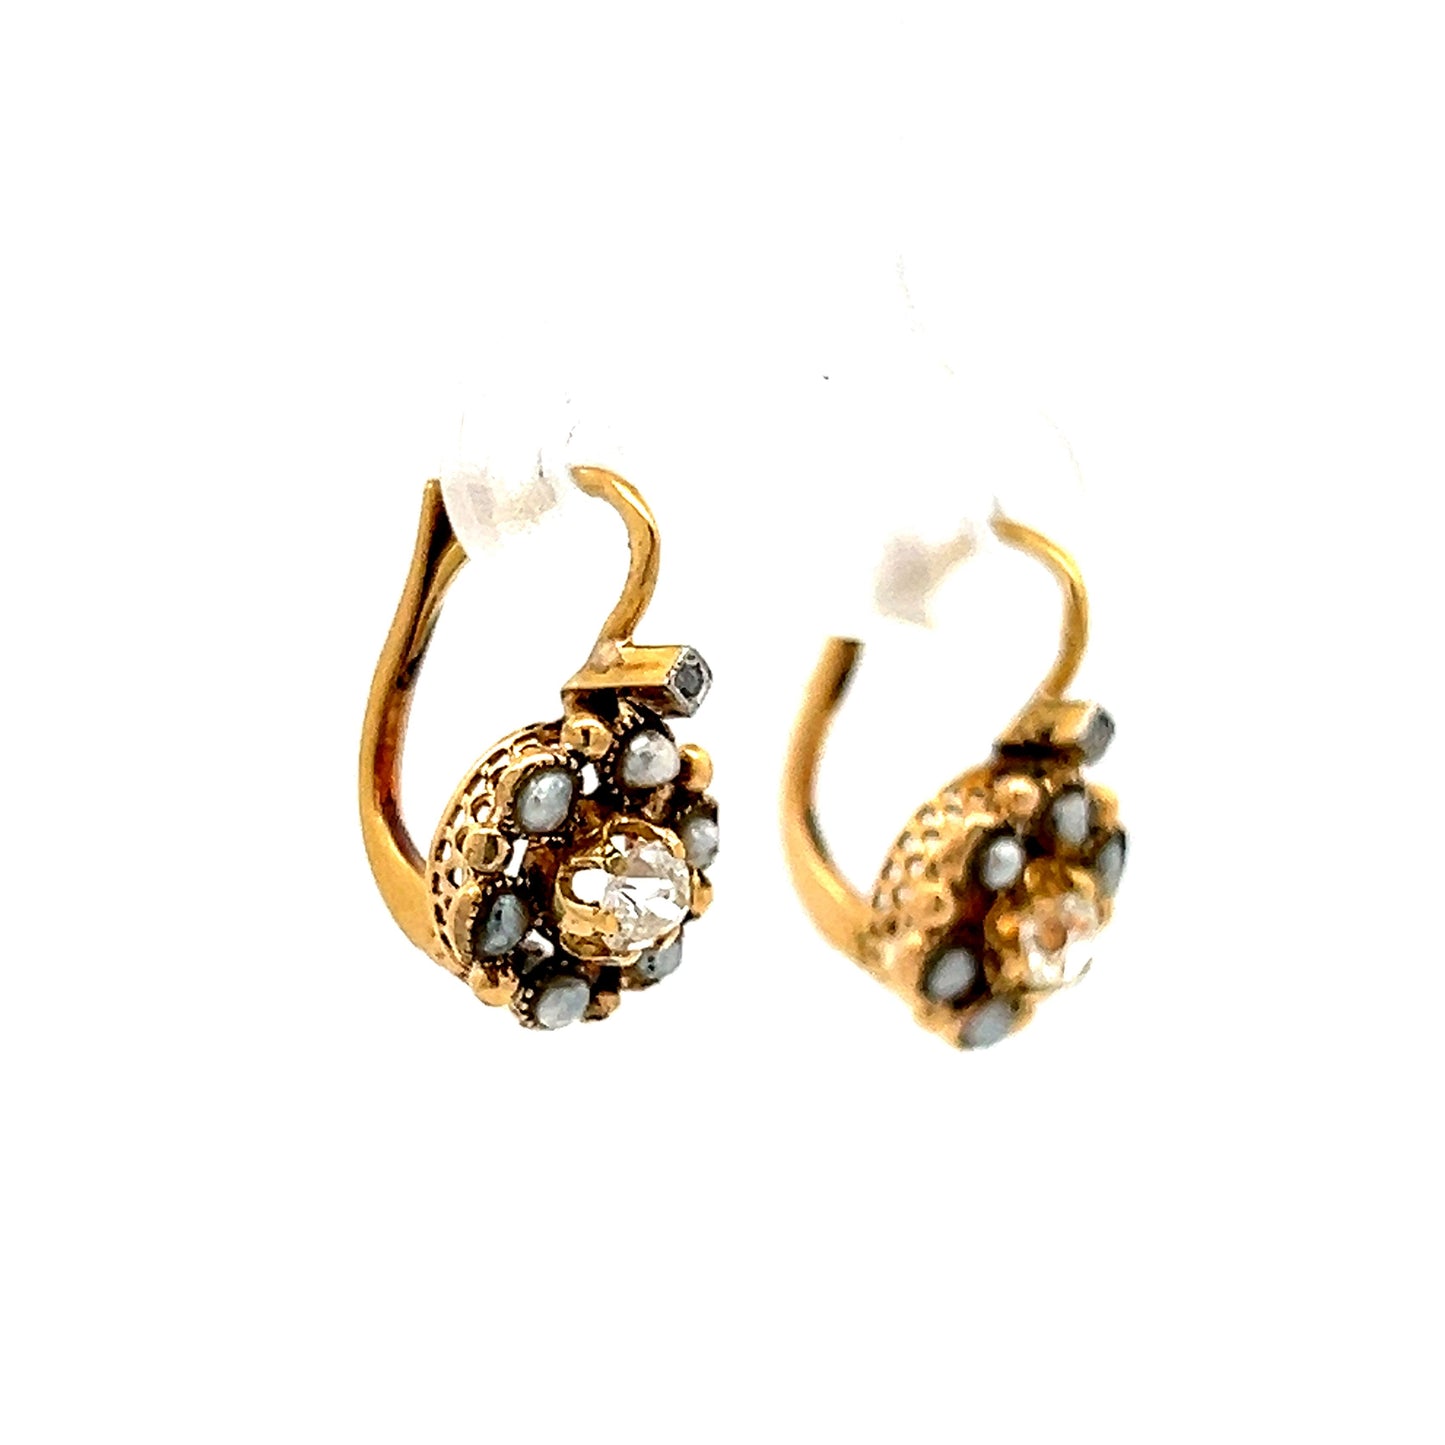 Antique Victorian Diamond Earrings in 14k Yellow Gold